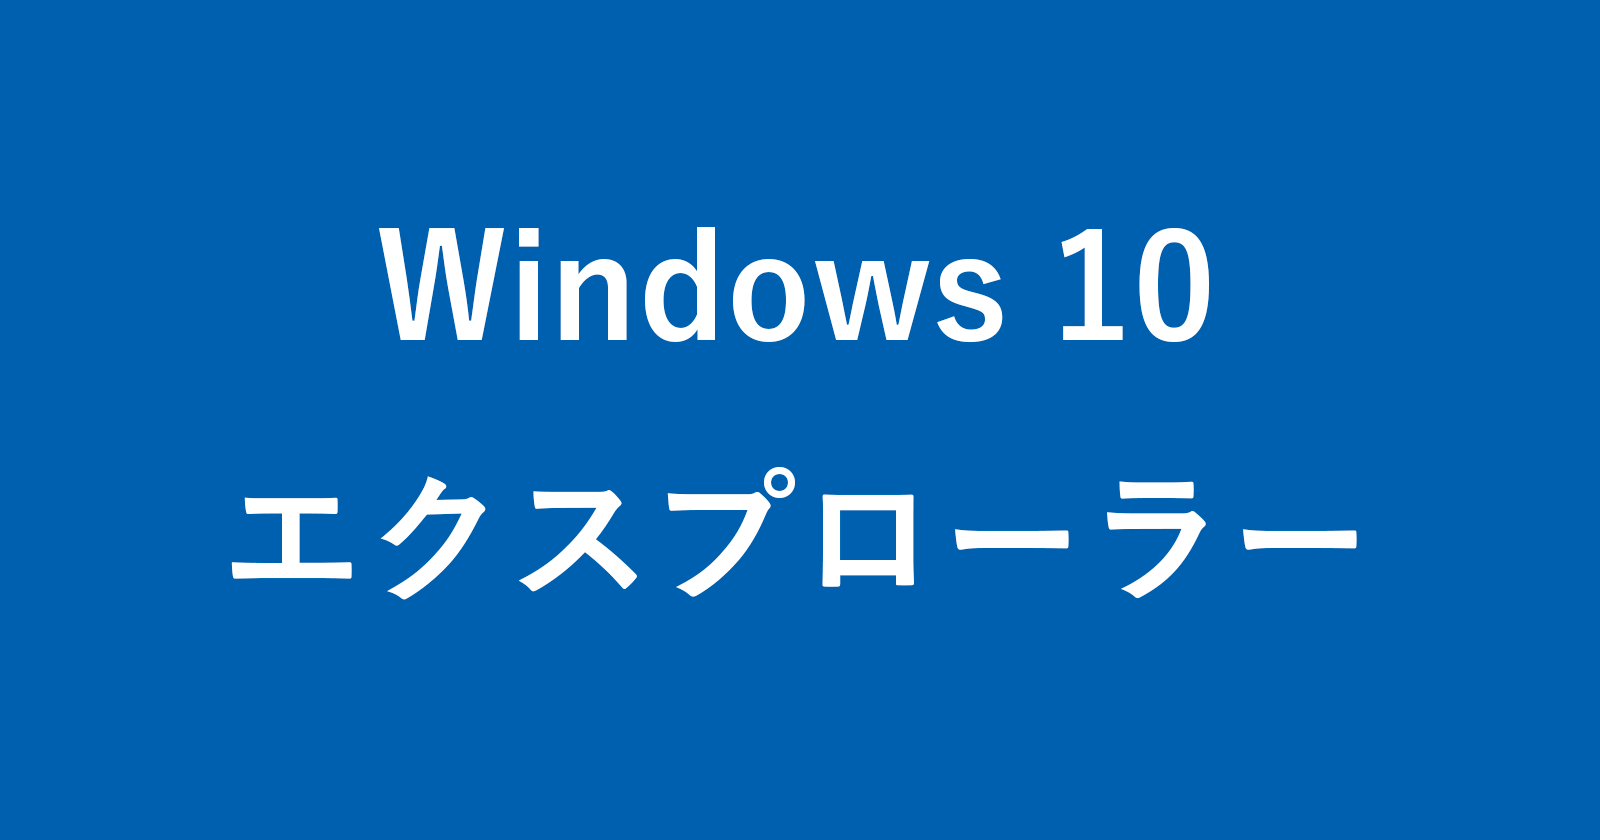 windows 10 explorer